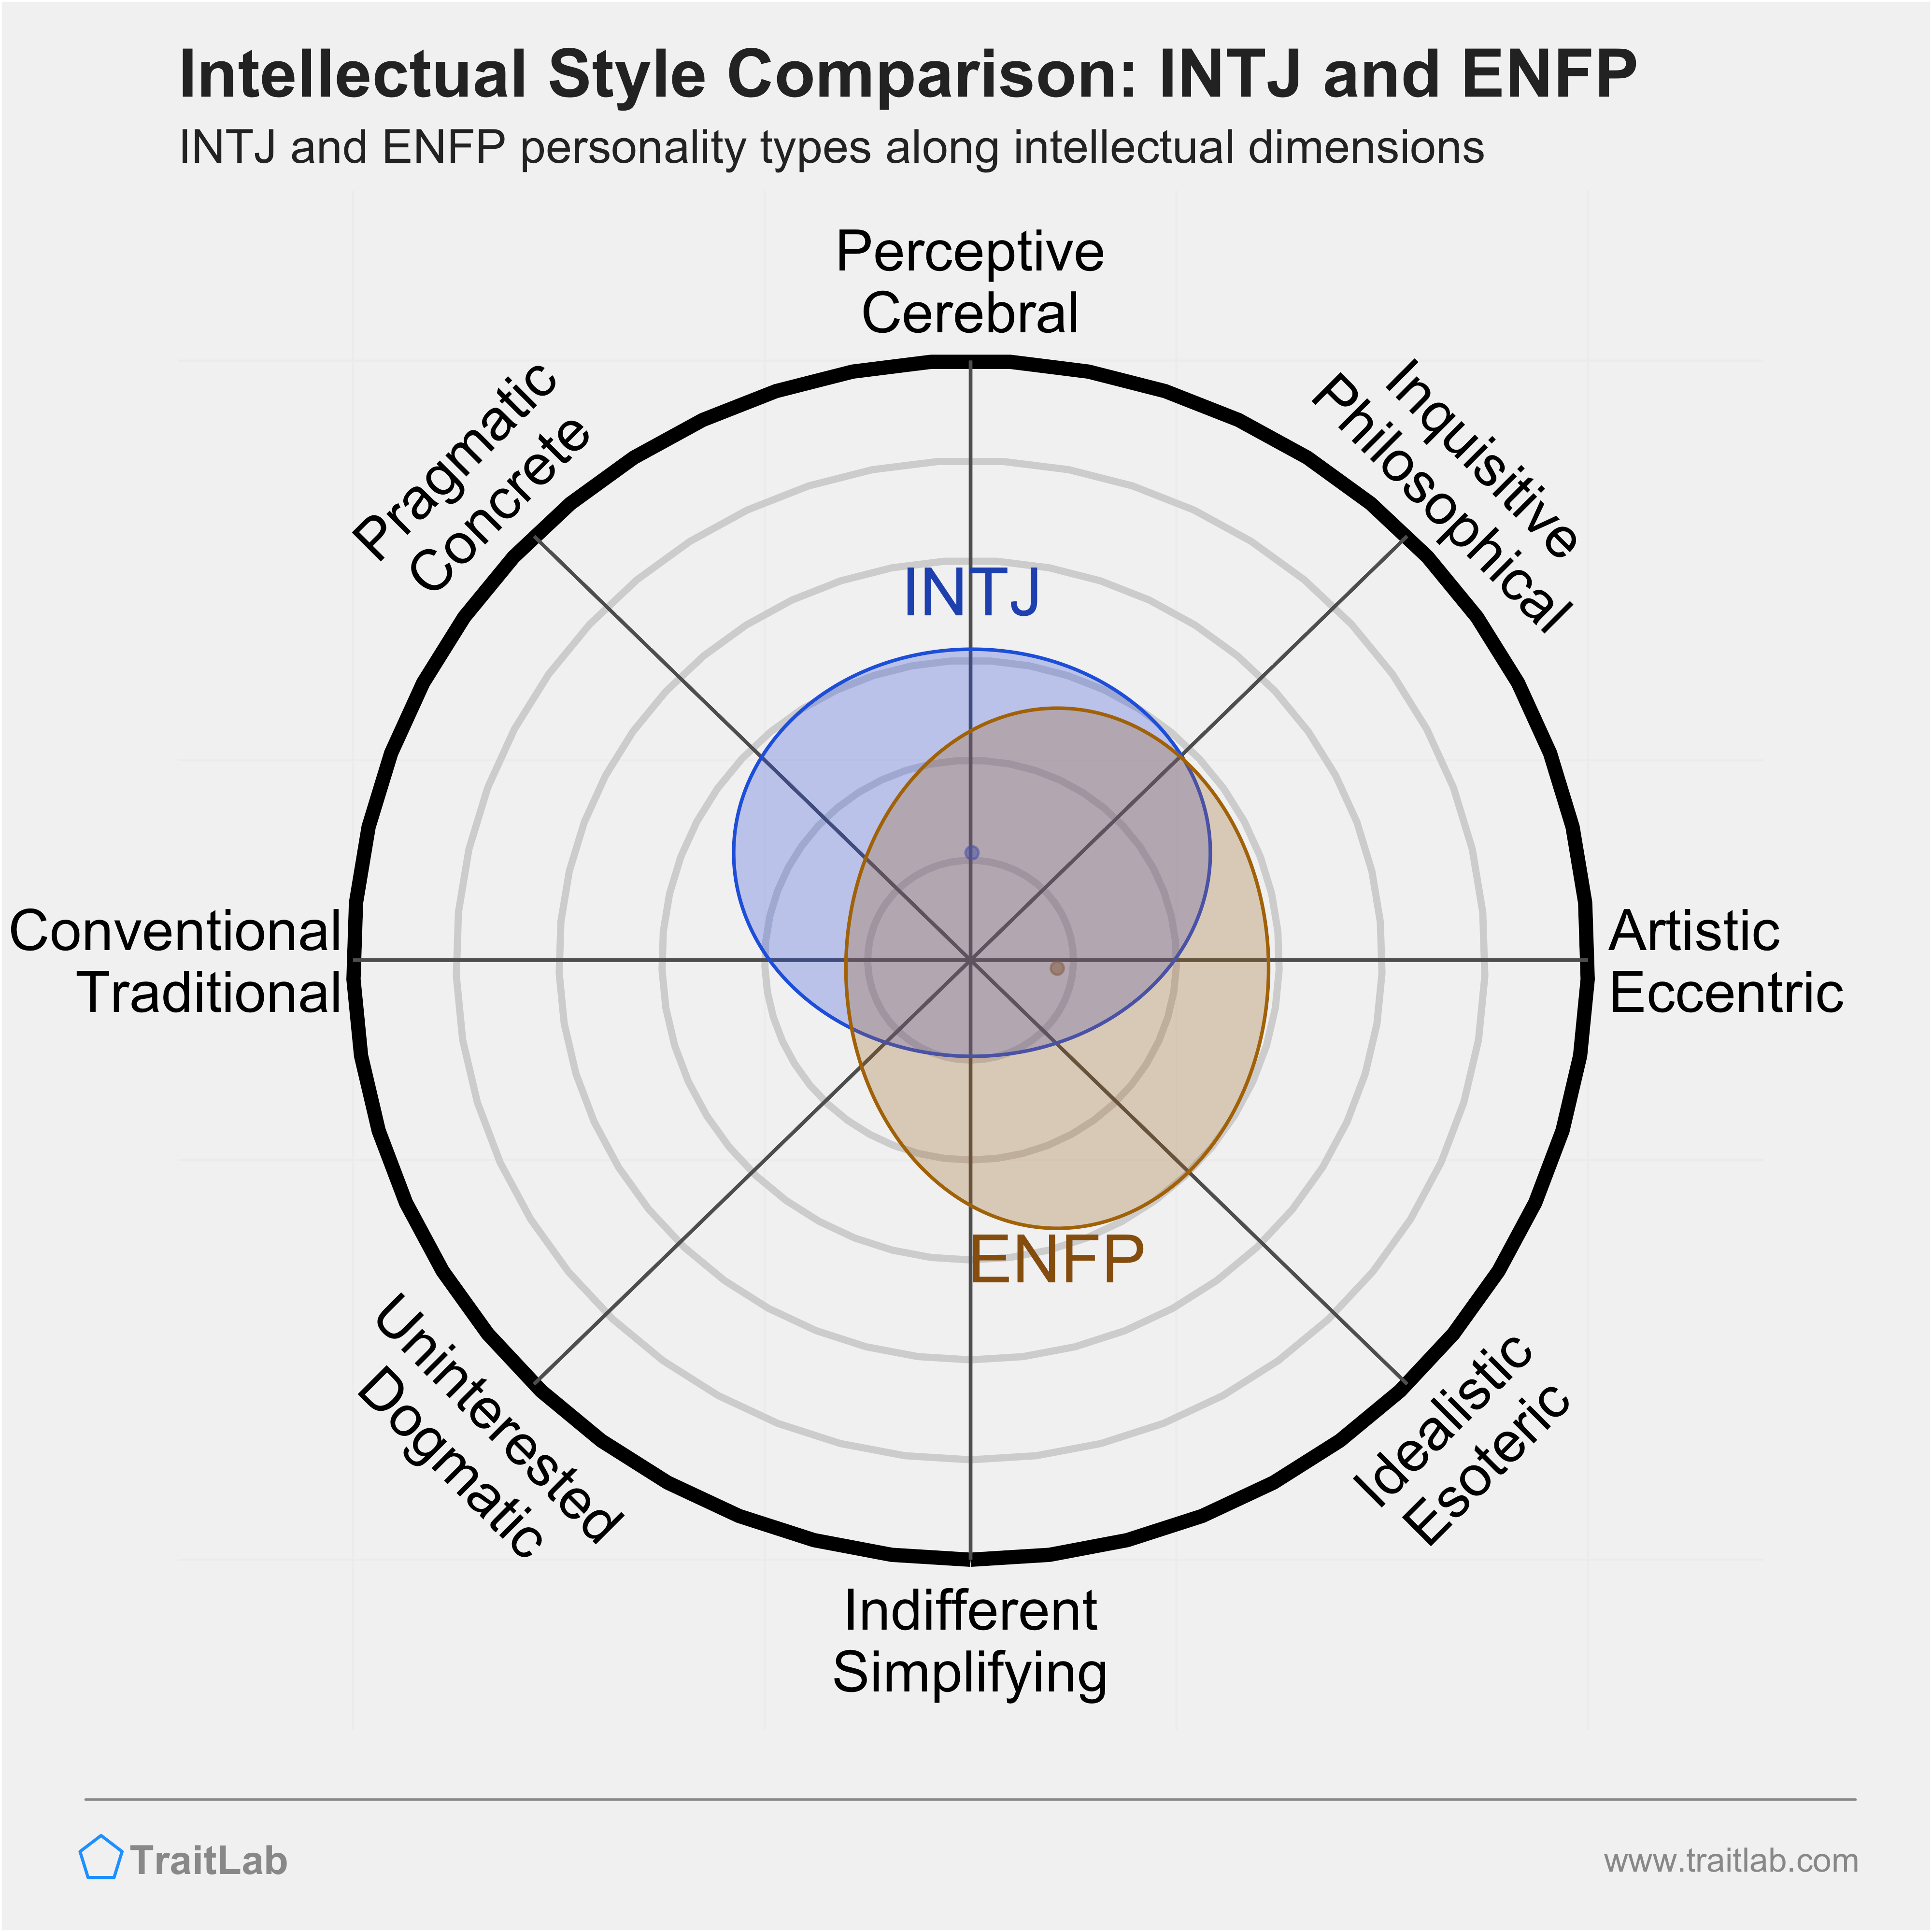 INTJ and ENFP comparison across intellectual dimensions